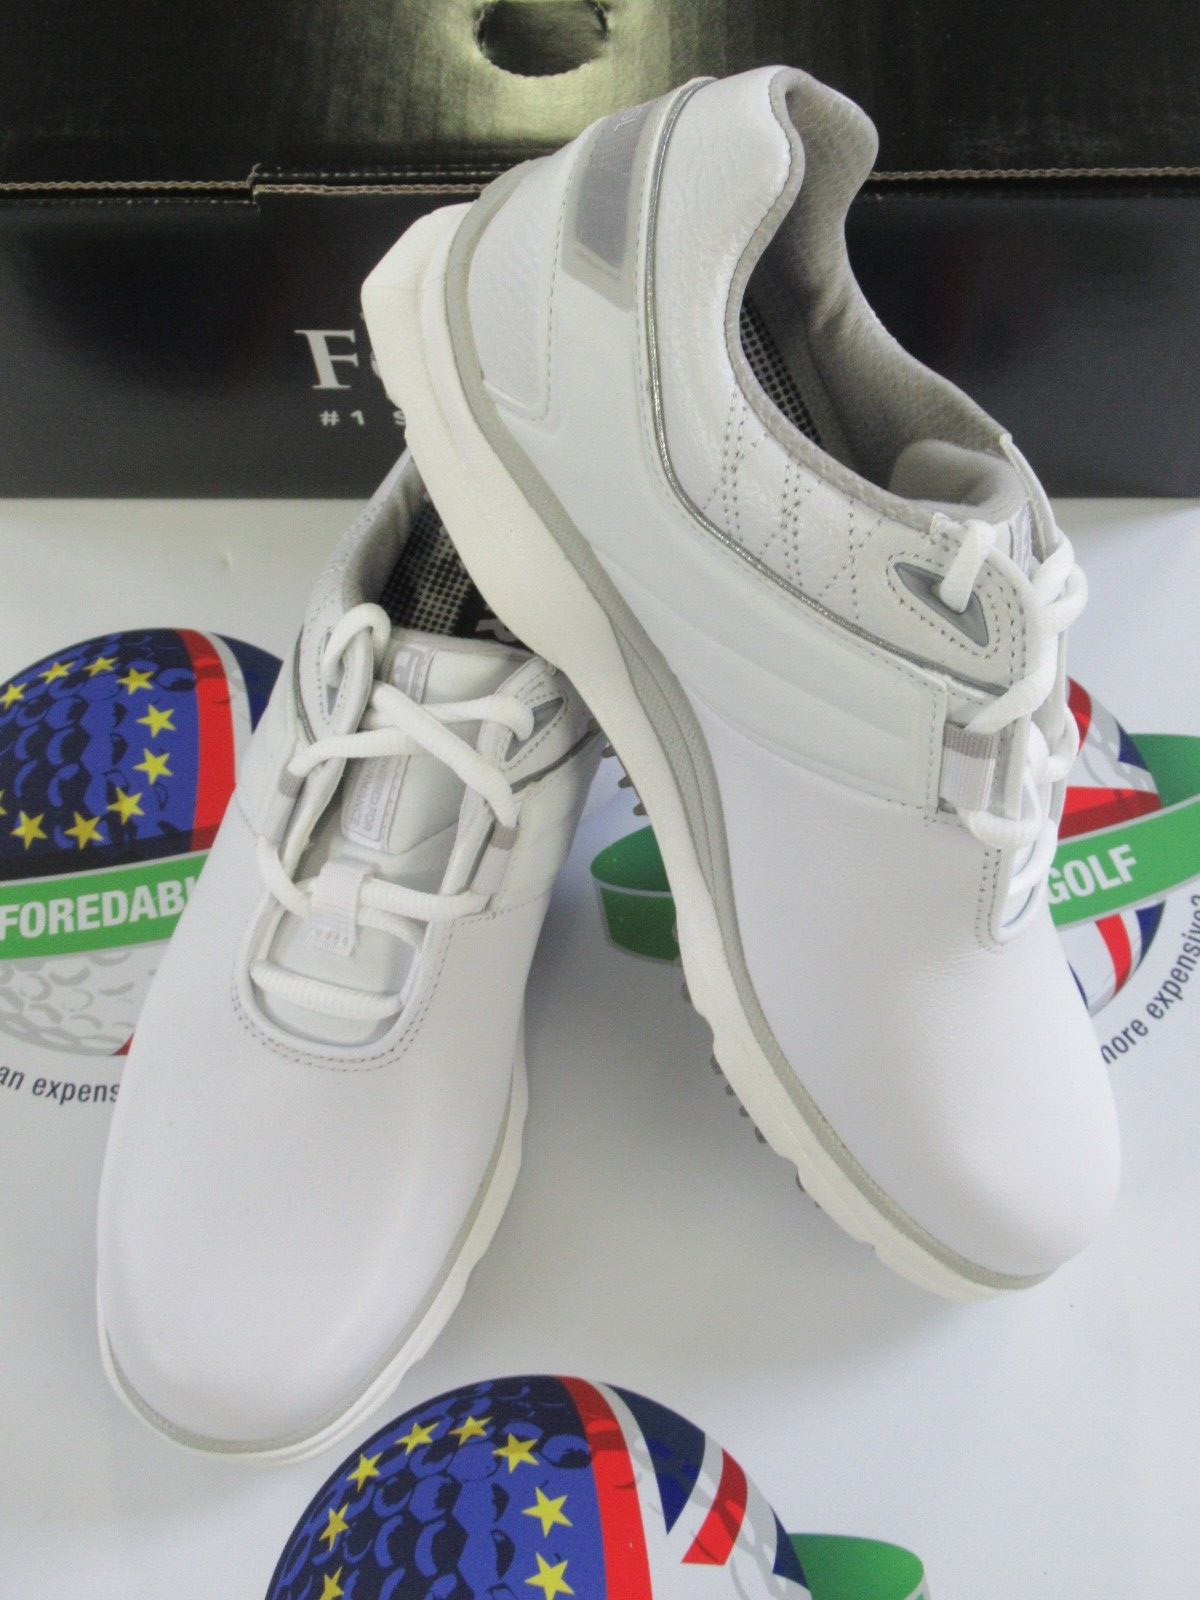 footjoy pro sl womens golf shoes white/silver uk size 8 wide/large